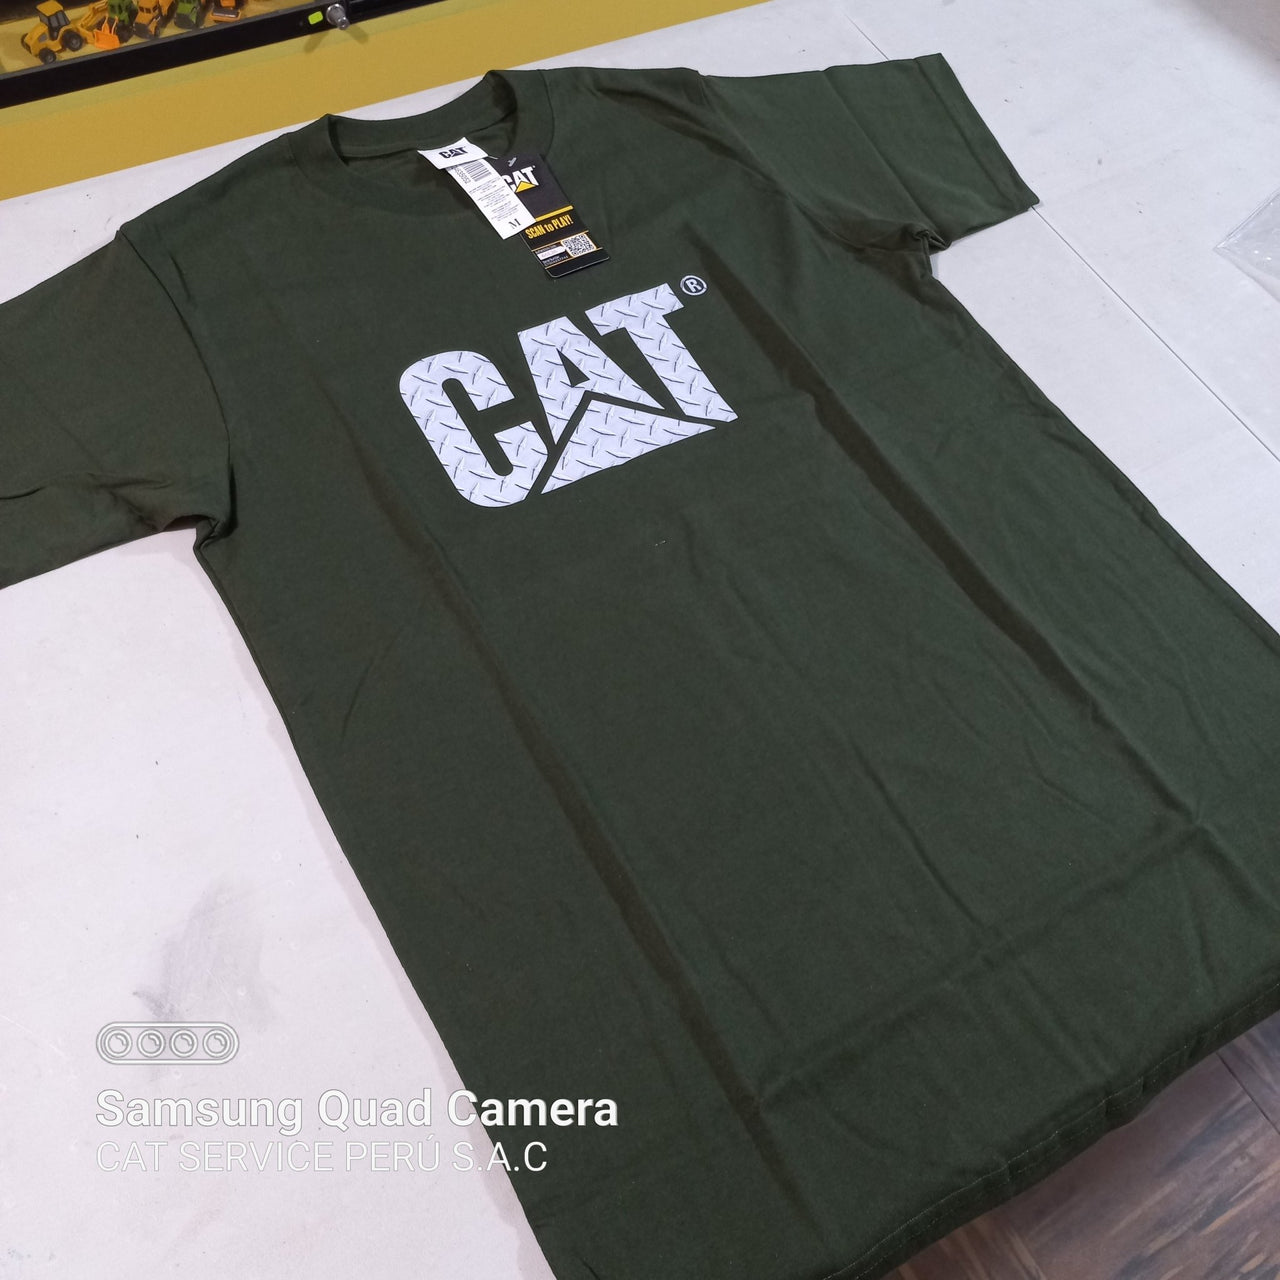 Polo Cat Verde Militar (Edición Limitada) - CAT SERVICE PERU S.A.C.